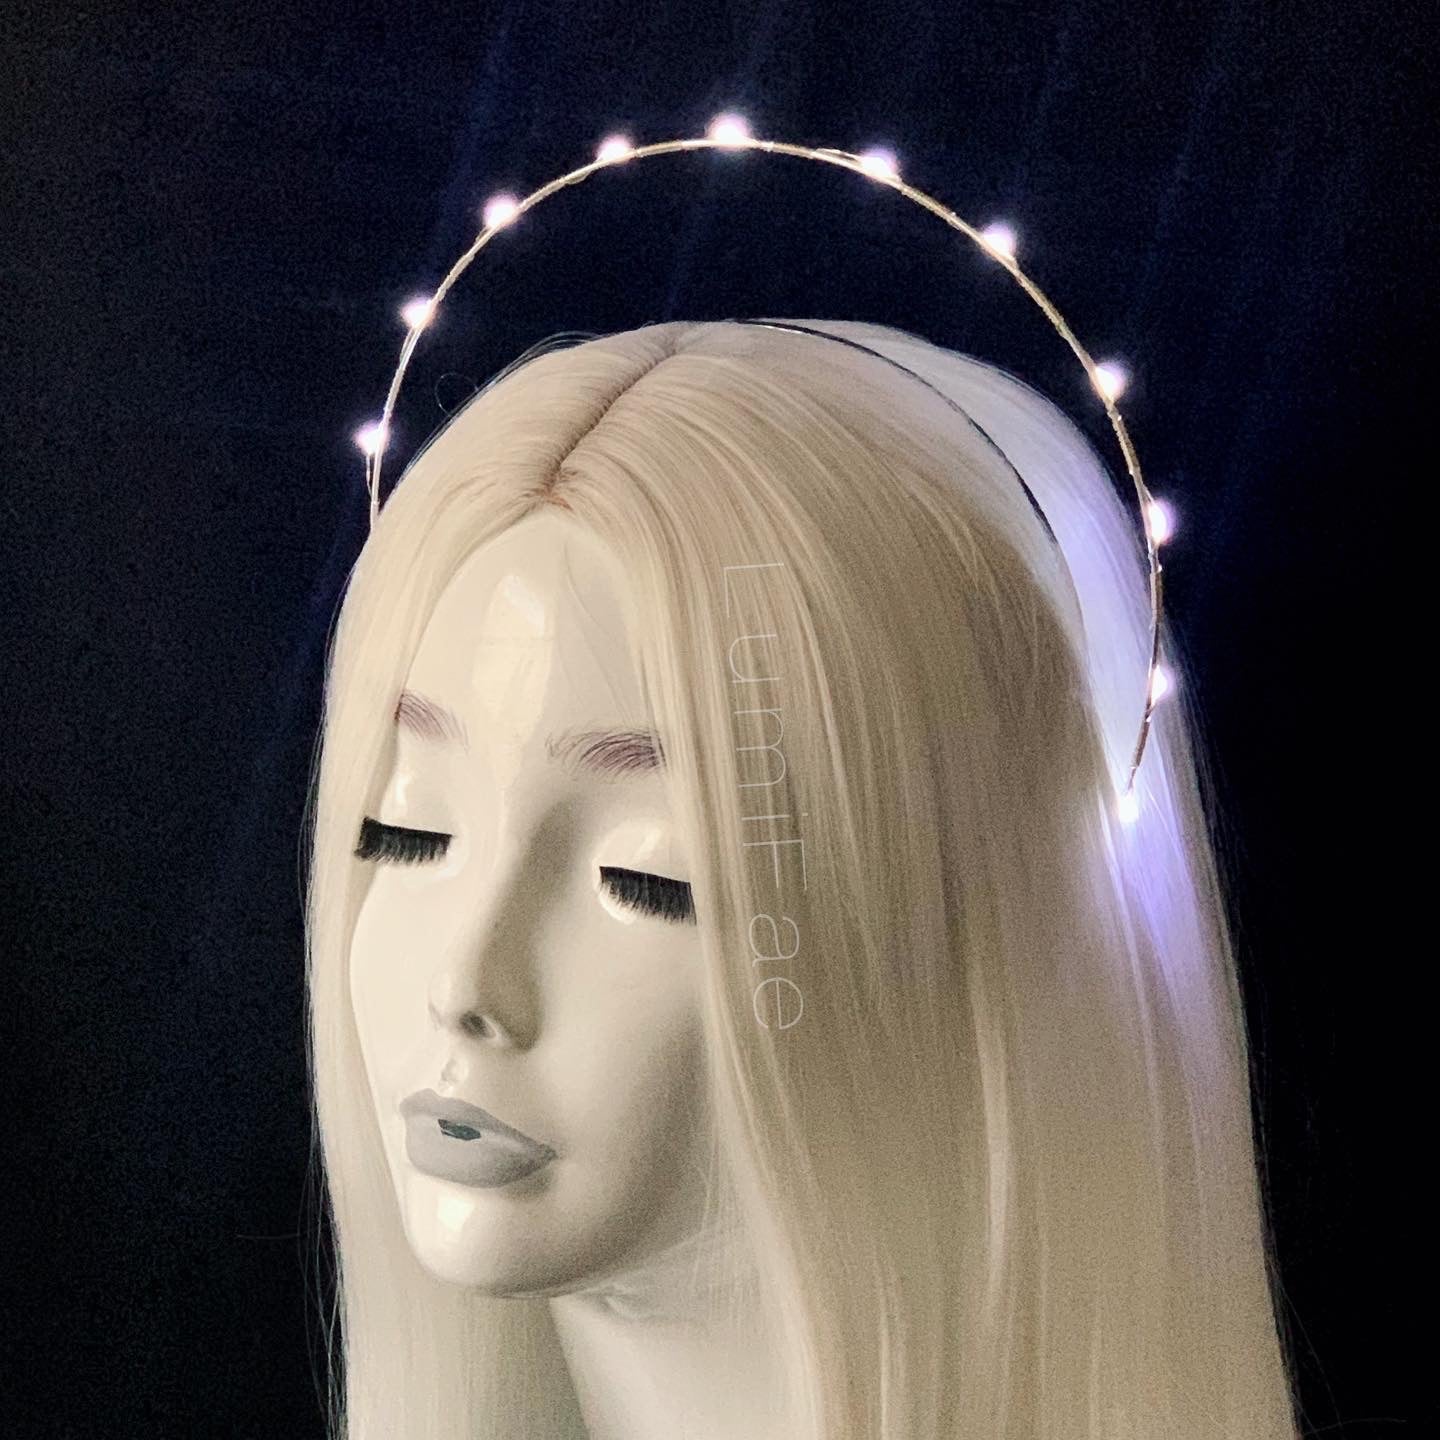 LED Goddess Halo Crown, MTO - LumiFae